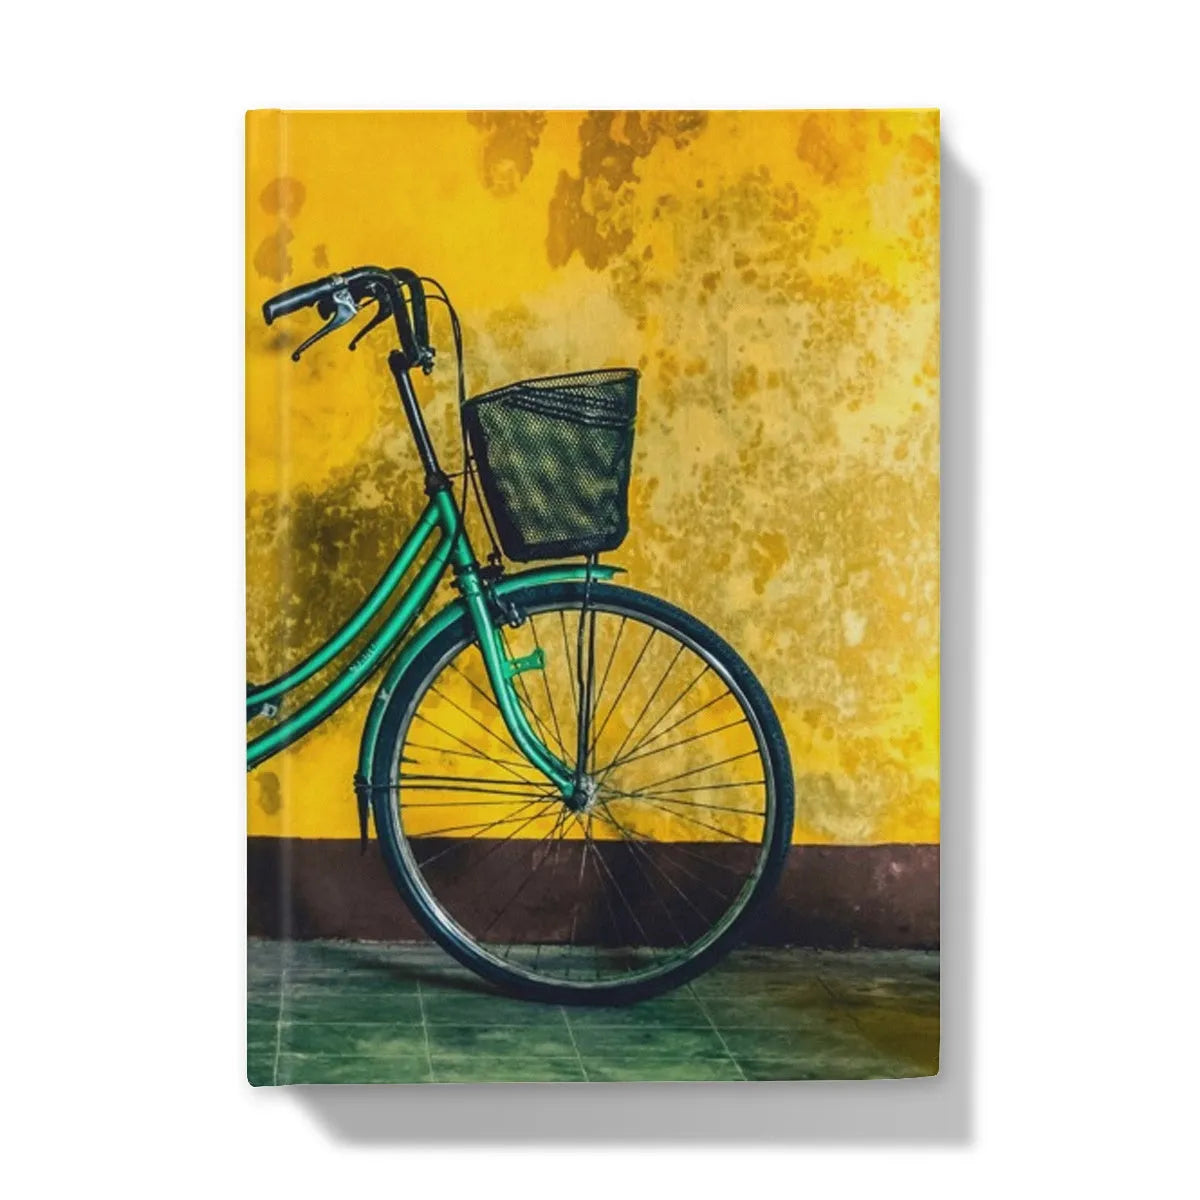 Lemon Lime - Hoi An Vietnam Bicycle Art Hardback Journal - 5’x7’ / Lined - Notebooks & Notepads - Aesthetic Art